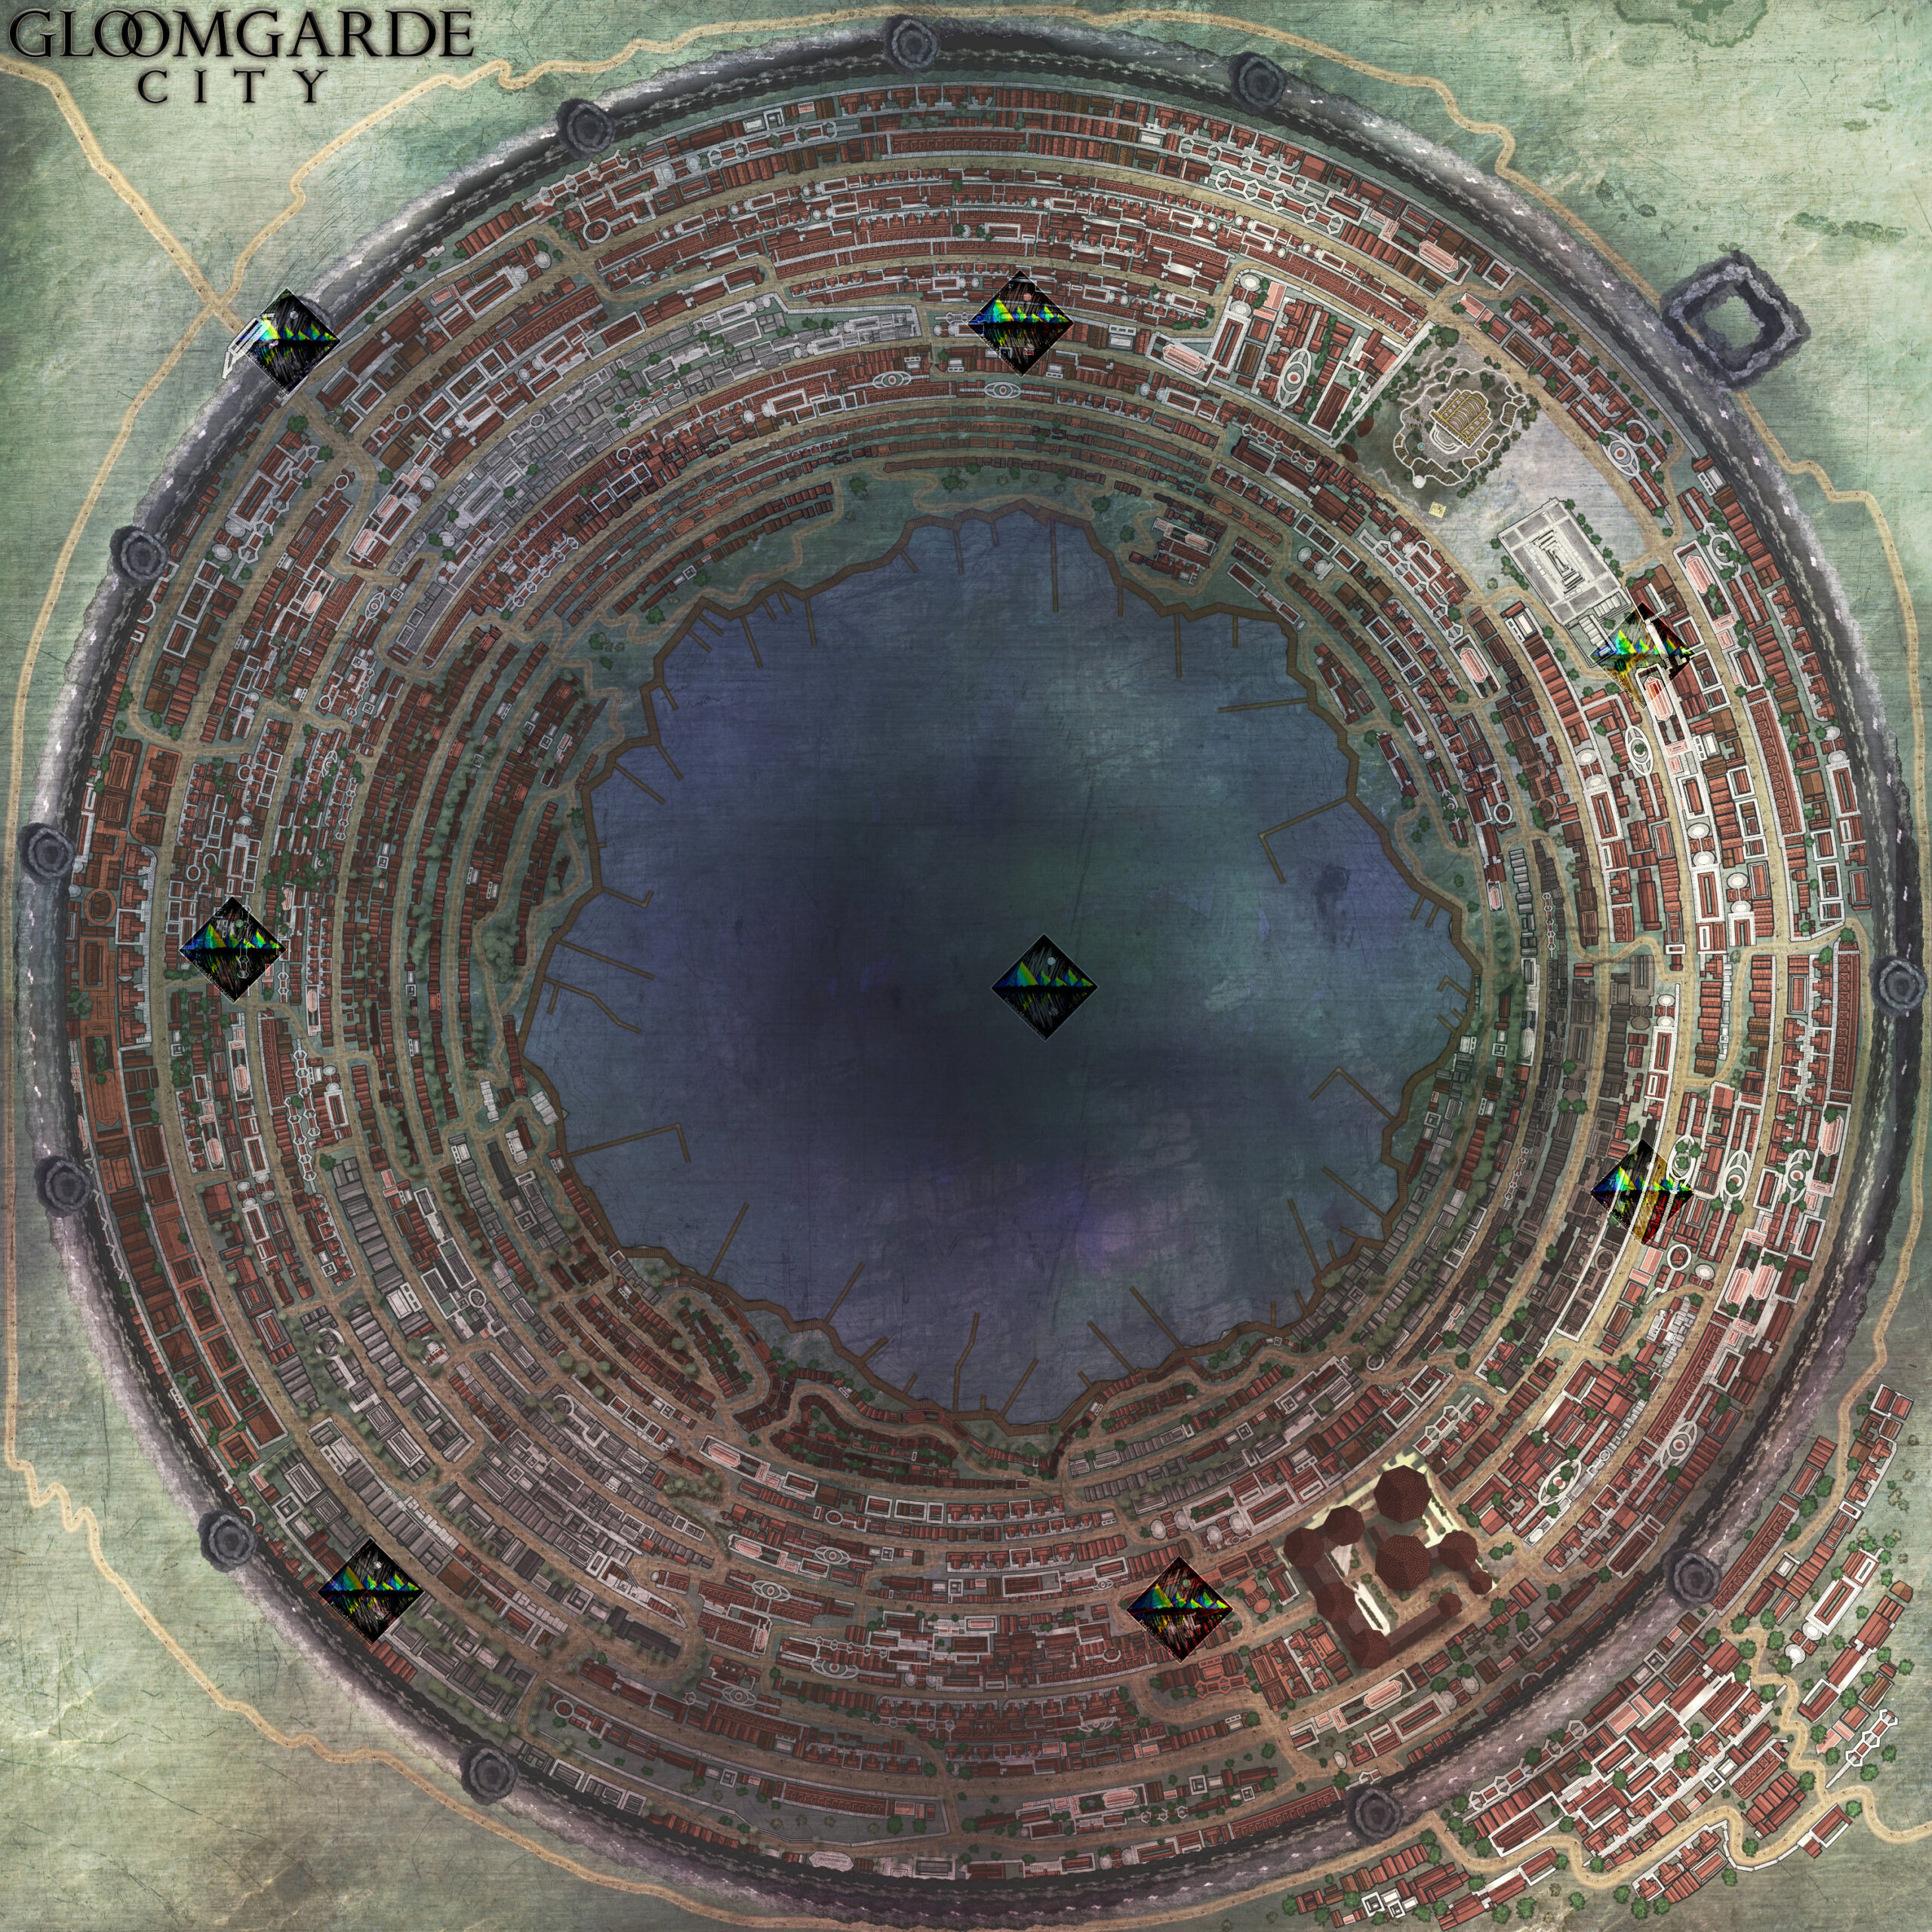 Gloomgarde City – round ringed Caldera City map